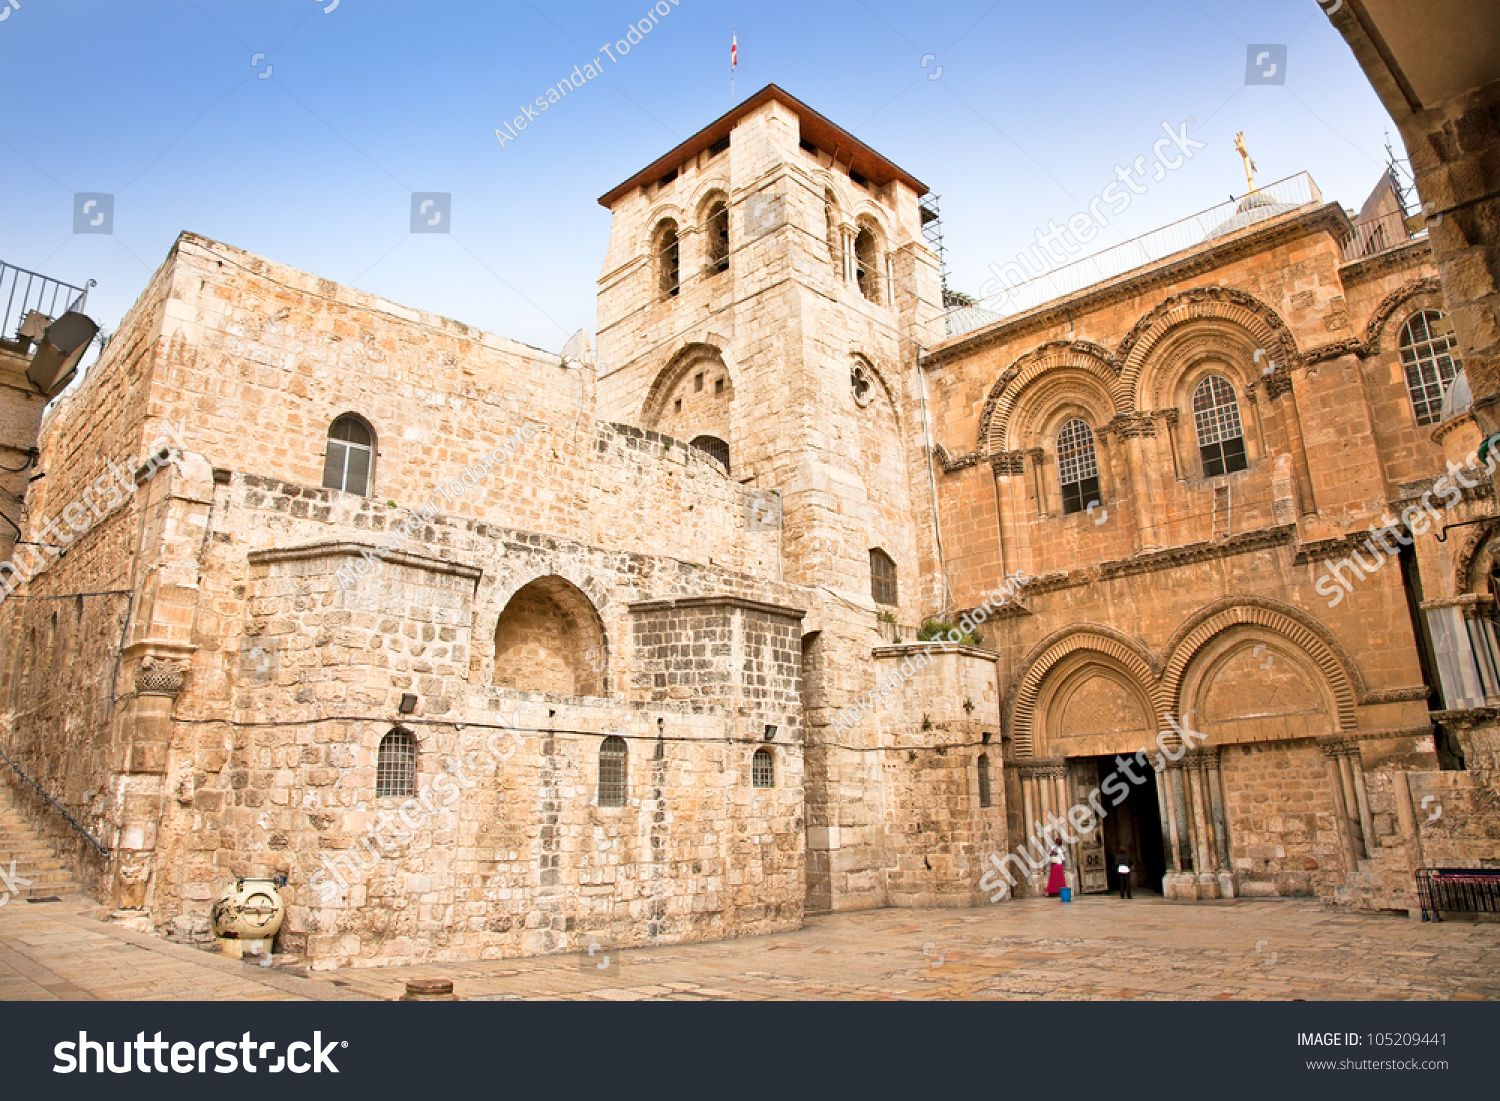 Church Of The Holy Sepulchre.Jerusalem.Israel #105209441